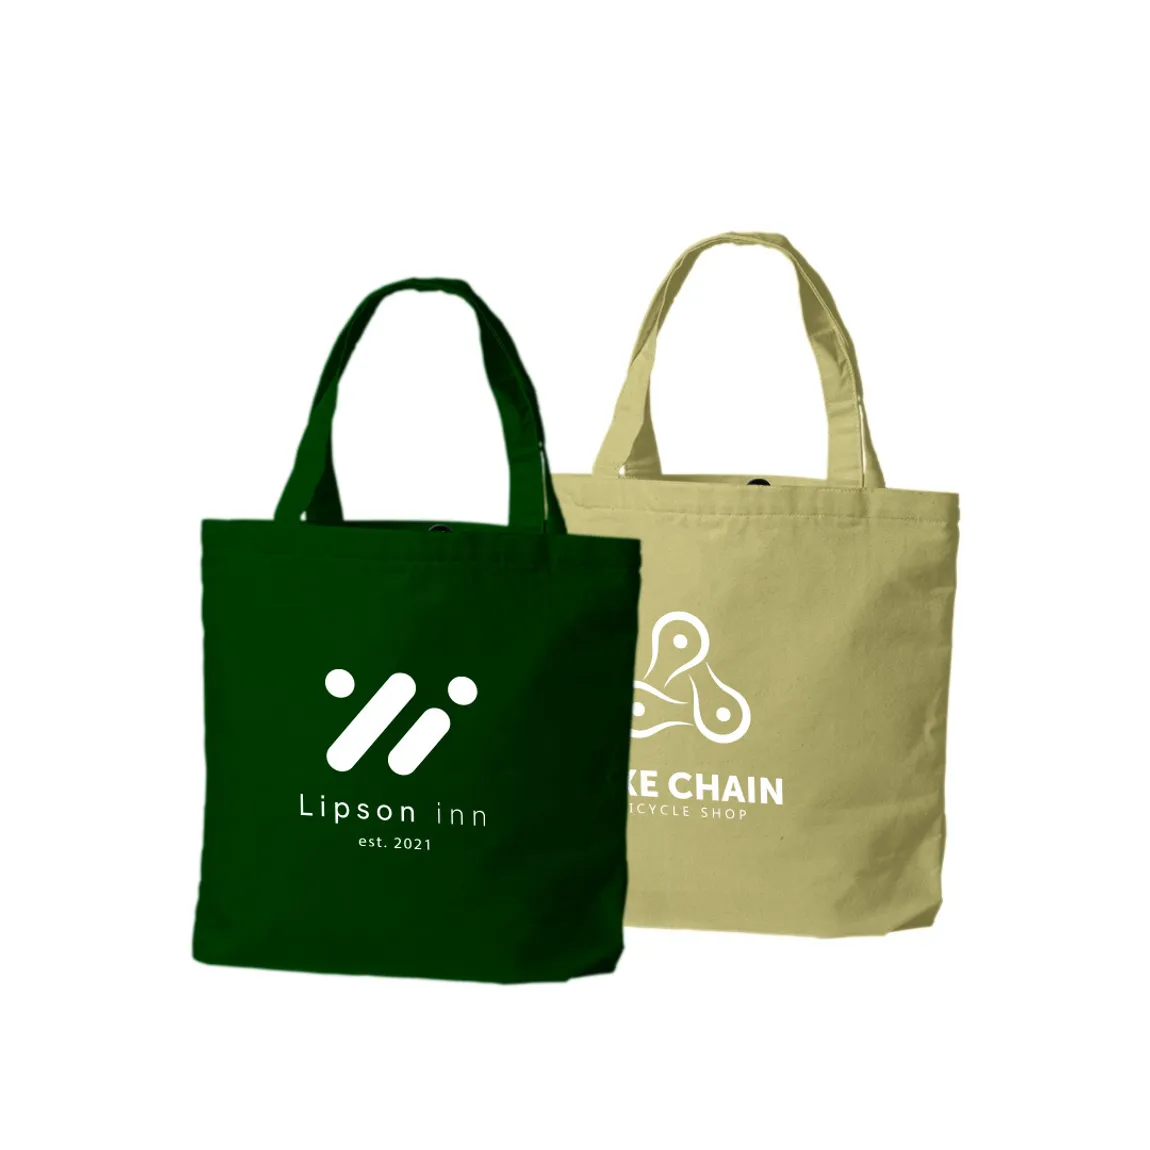 Organic Cotton 6 Pocket Tote Bag – Ecovana Retail Inc.